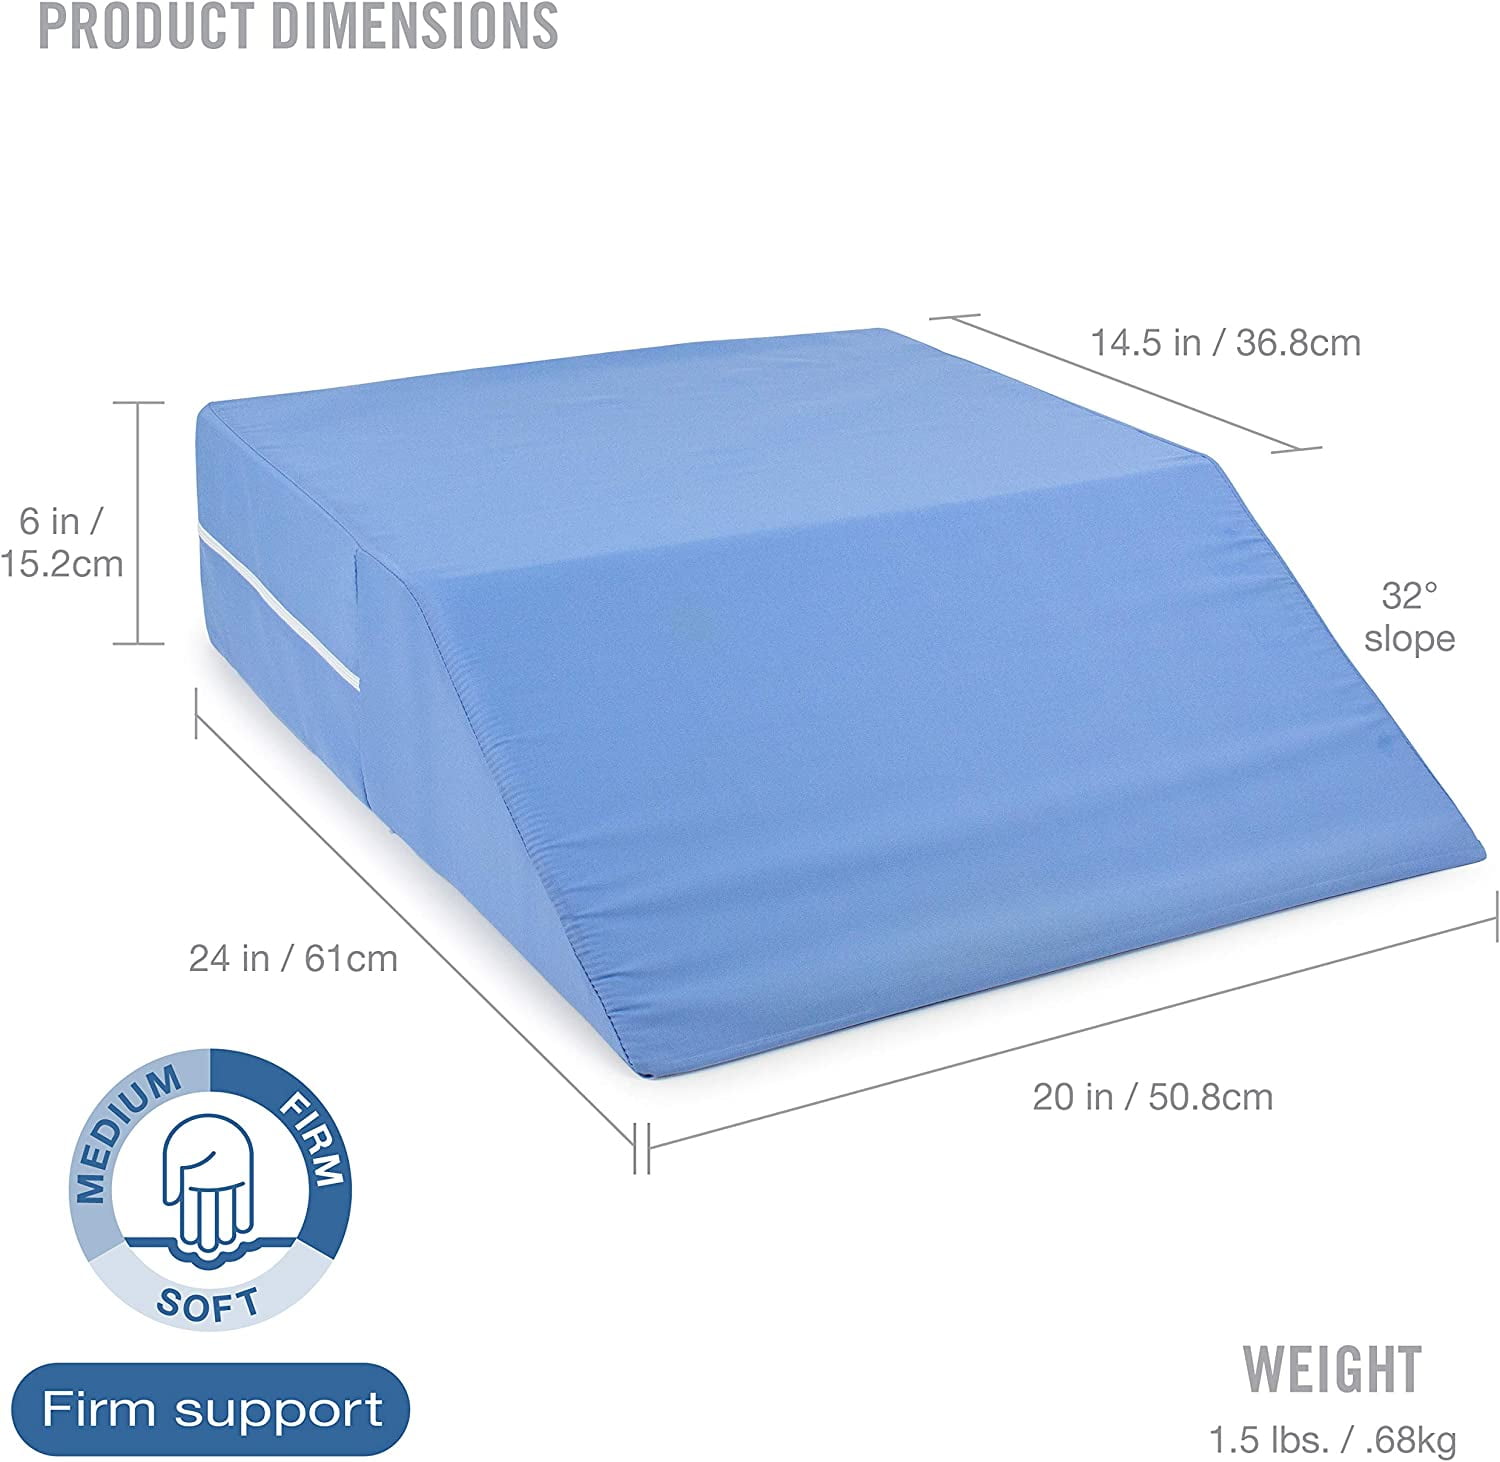 DMI Wedge Pillow, Leg Pillow, Bolster Pillow, Incline Pillow for Leg  Elevation, Snoring, Circulation, Pregnancy, Sciatica, Rest or Foot  Elevation